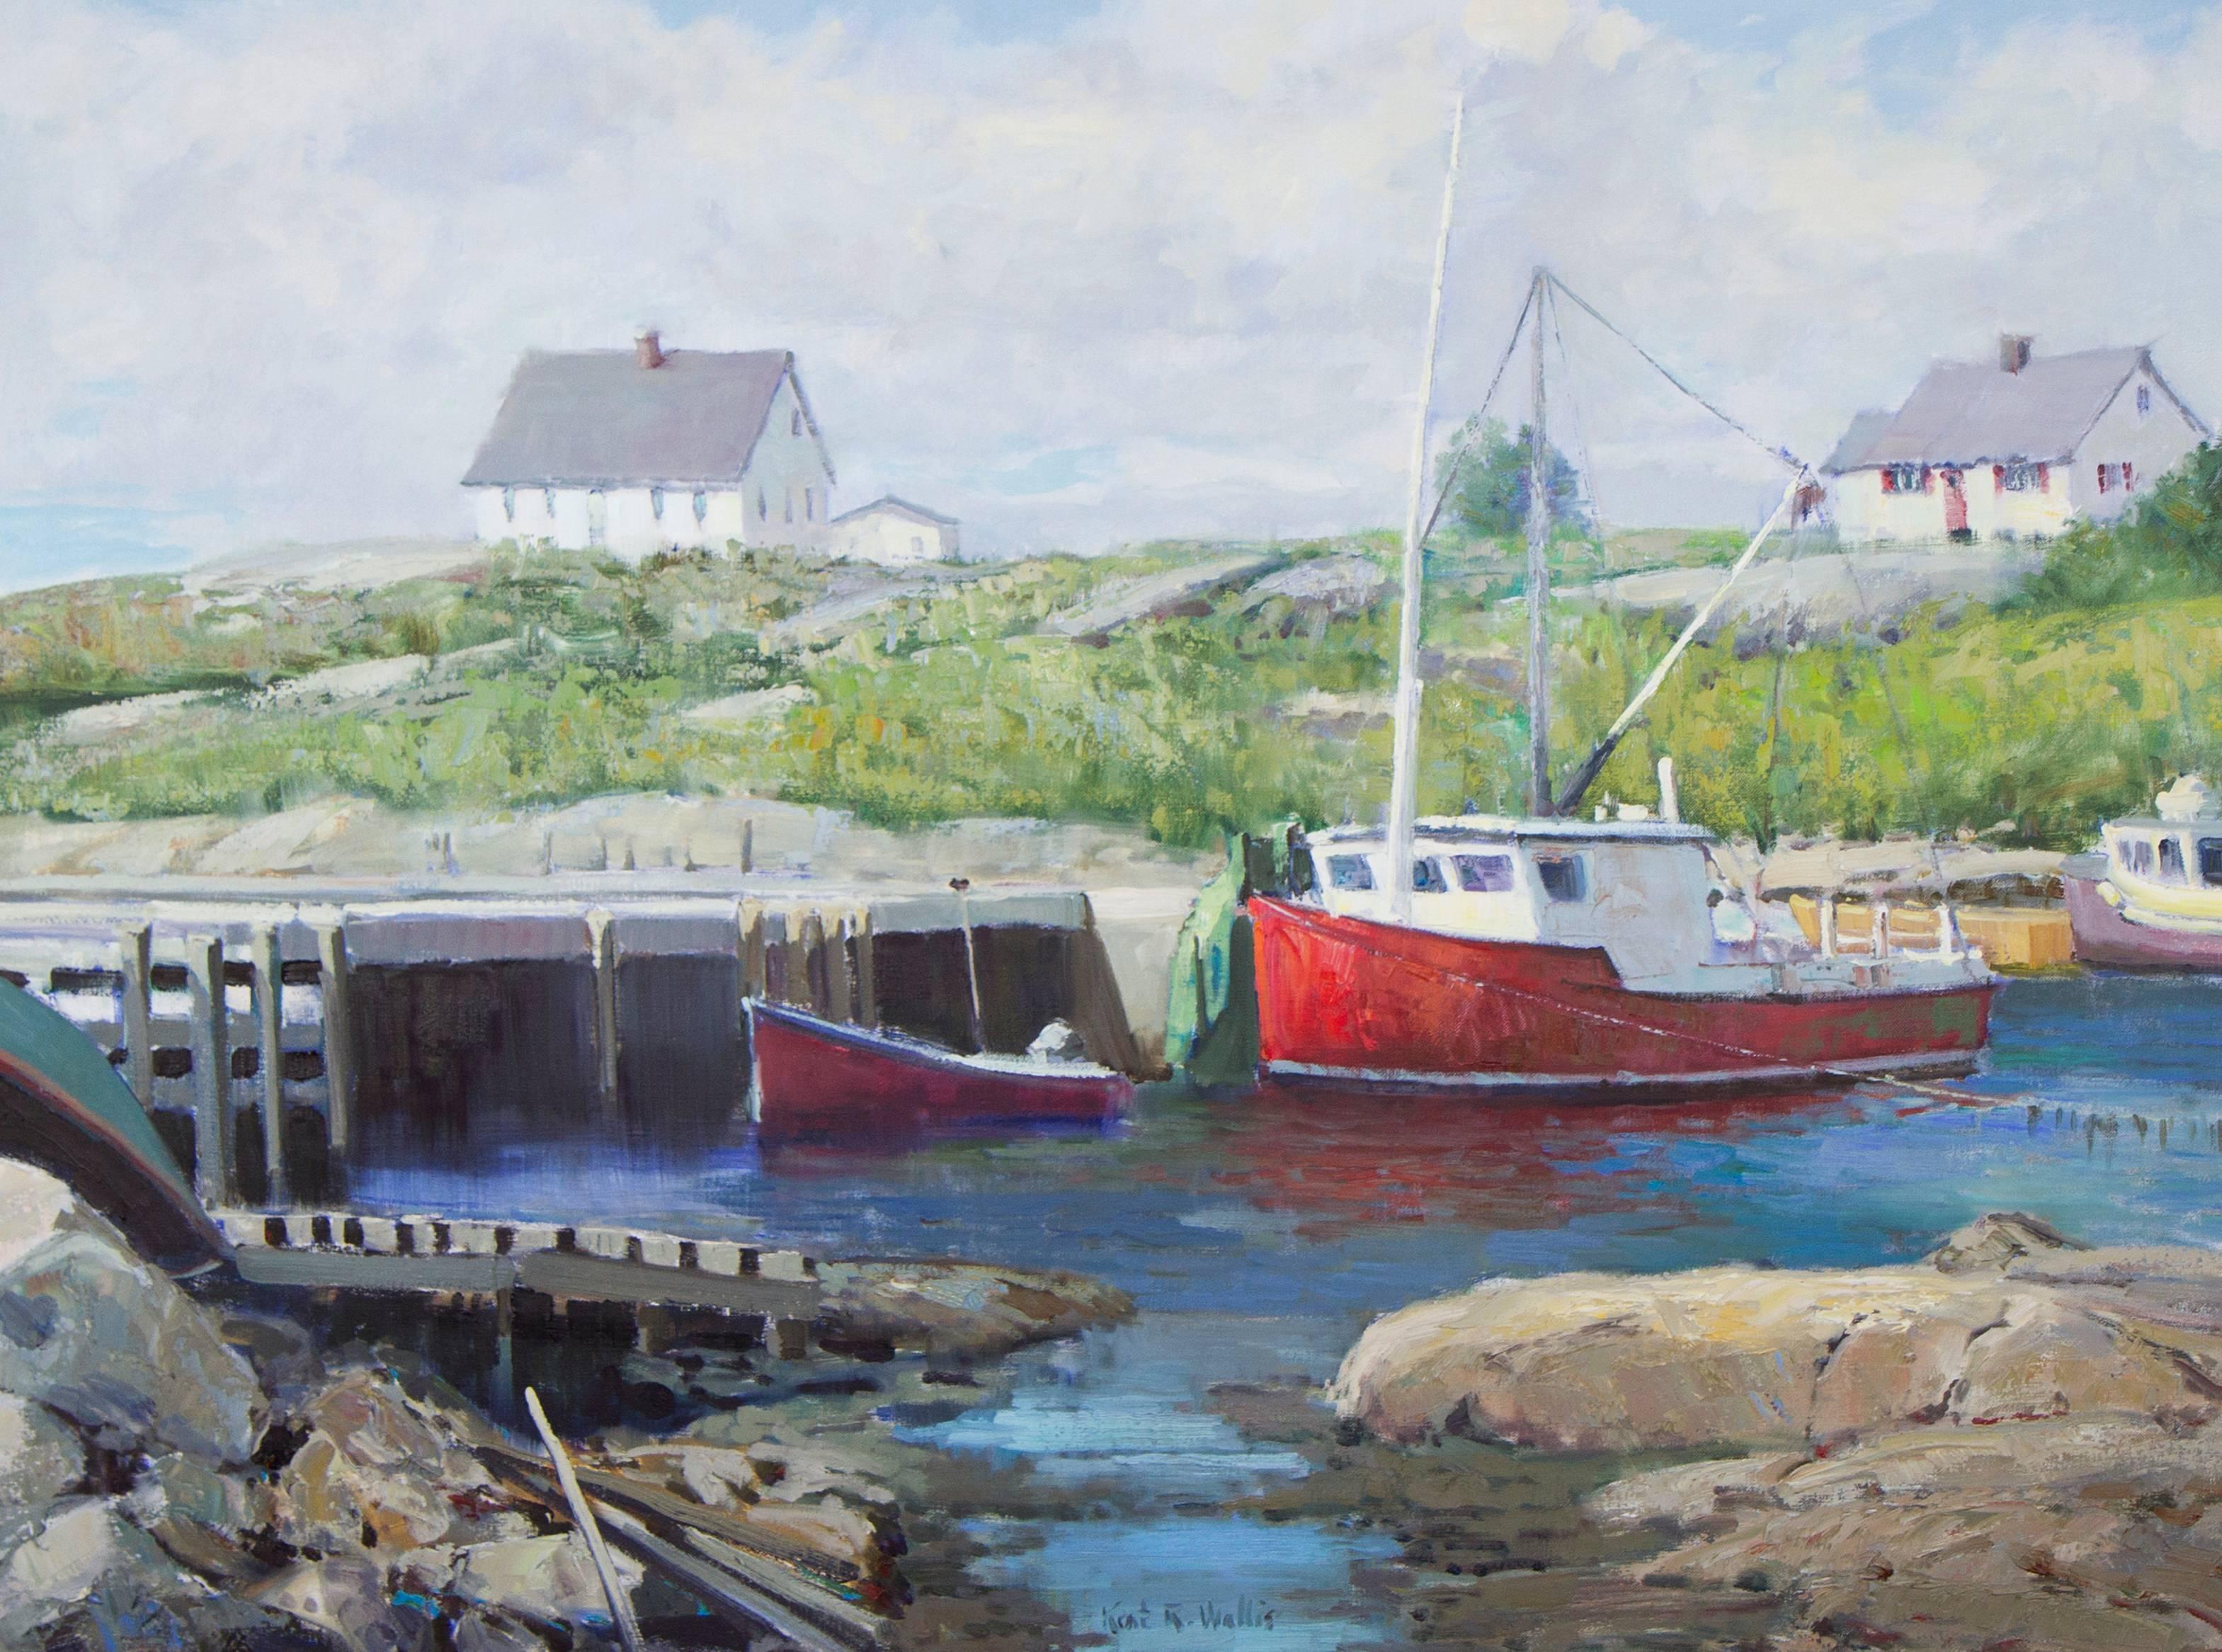 Peggy's Cove, Nova Scotia - Painting by Kent Wallis